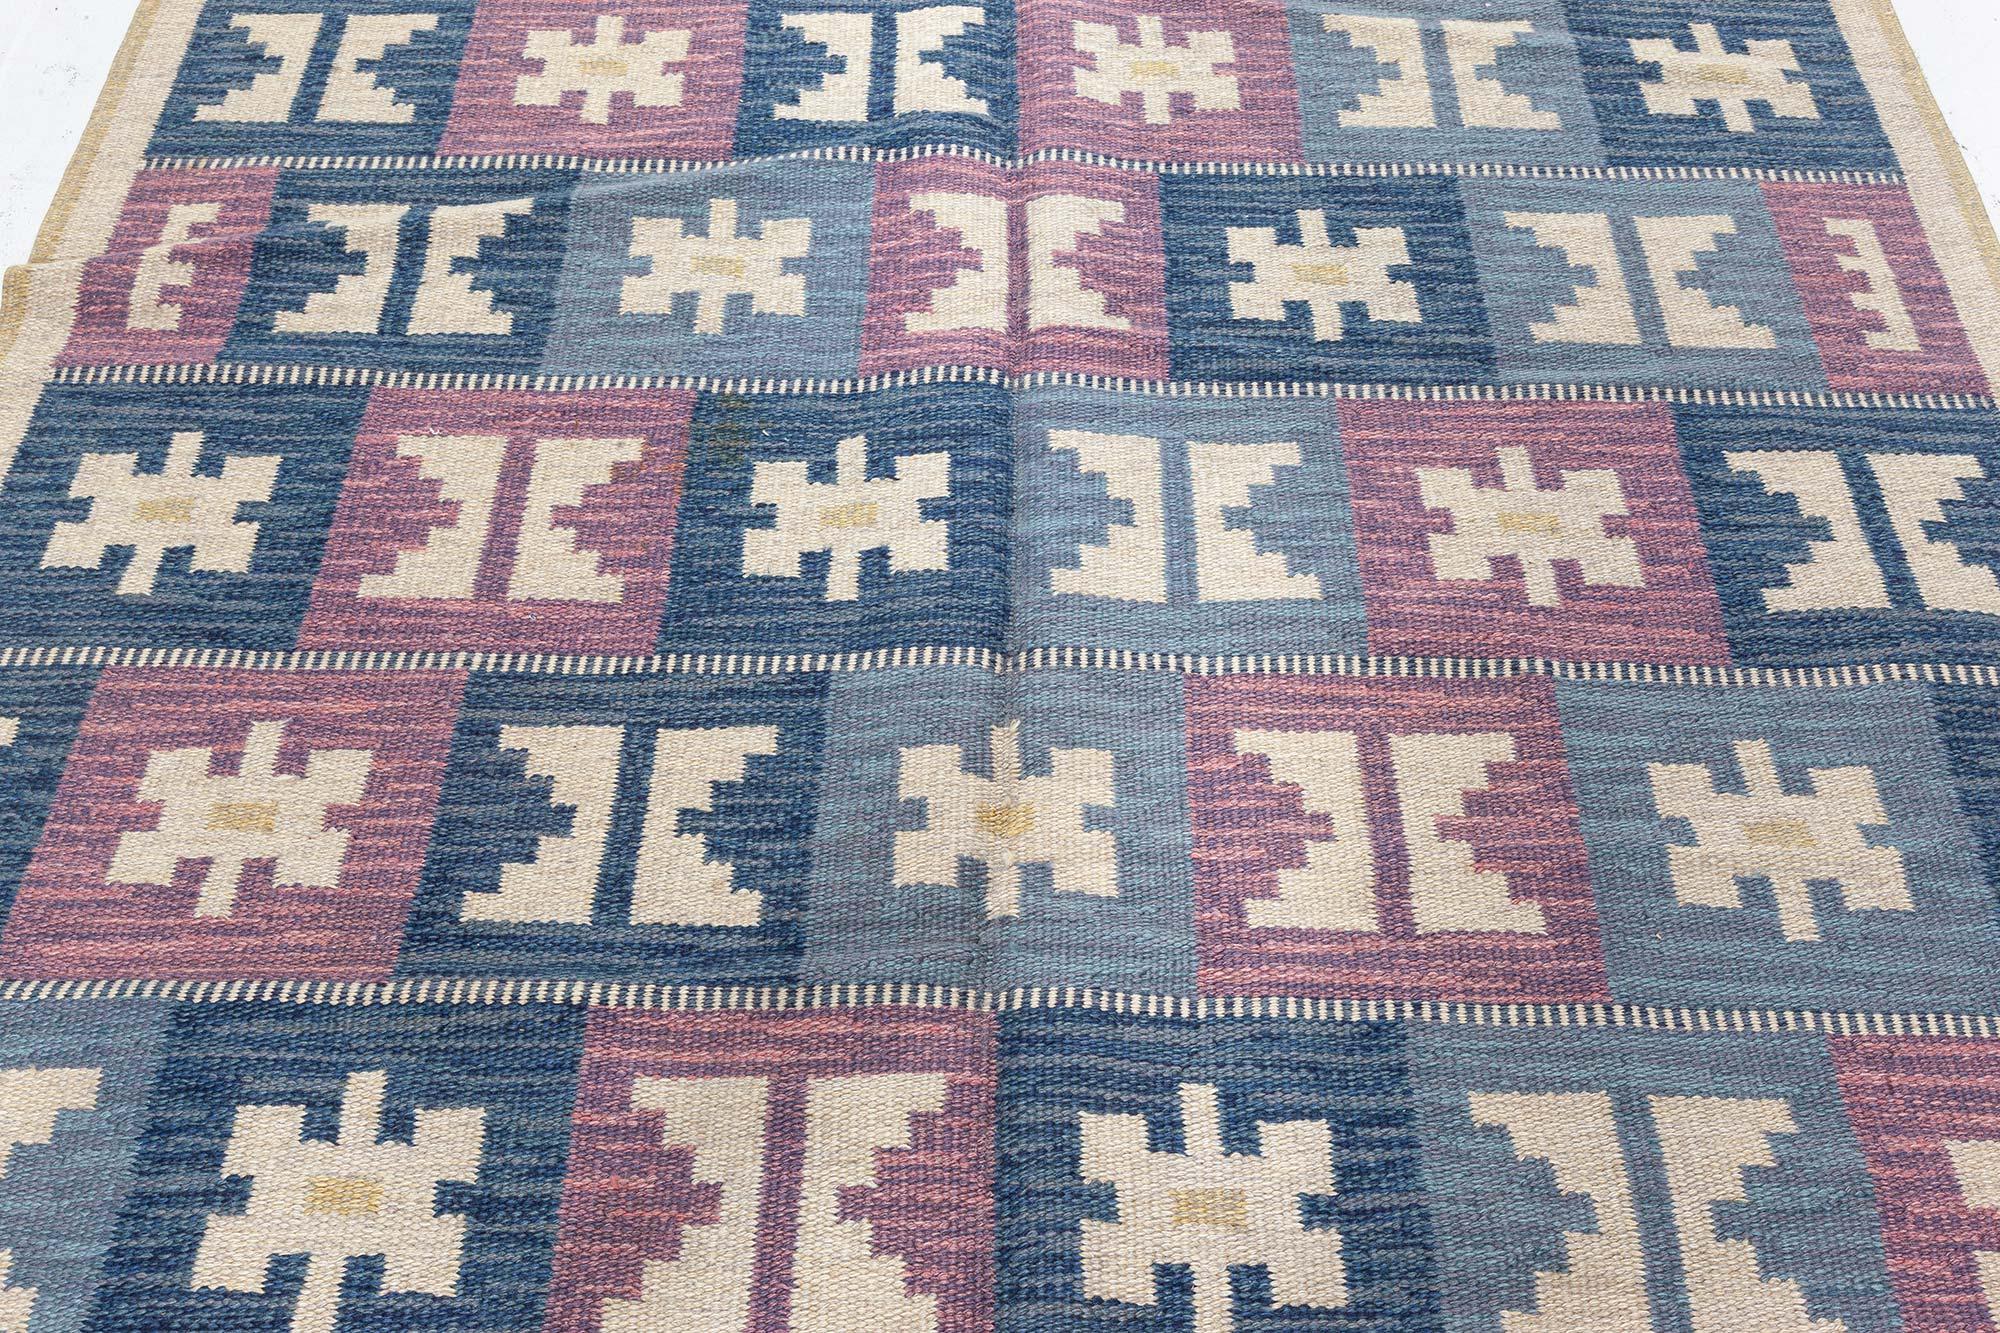 Vintage Swedish geometric flat-weave wool by Anna-Greta Sjöqvist
Size: 5'2